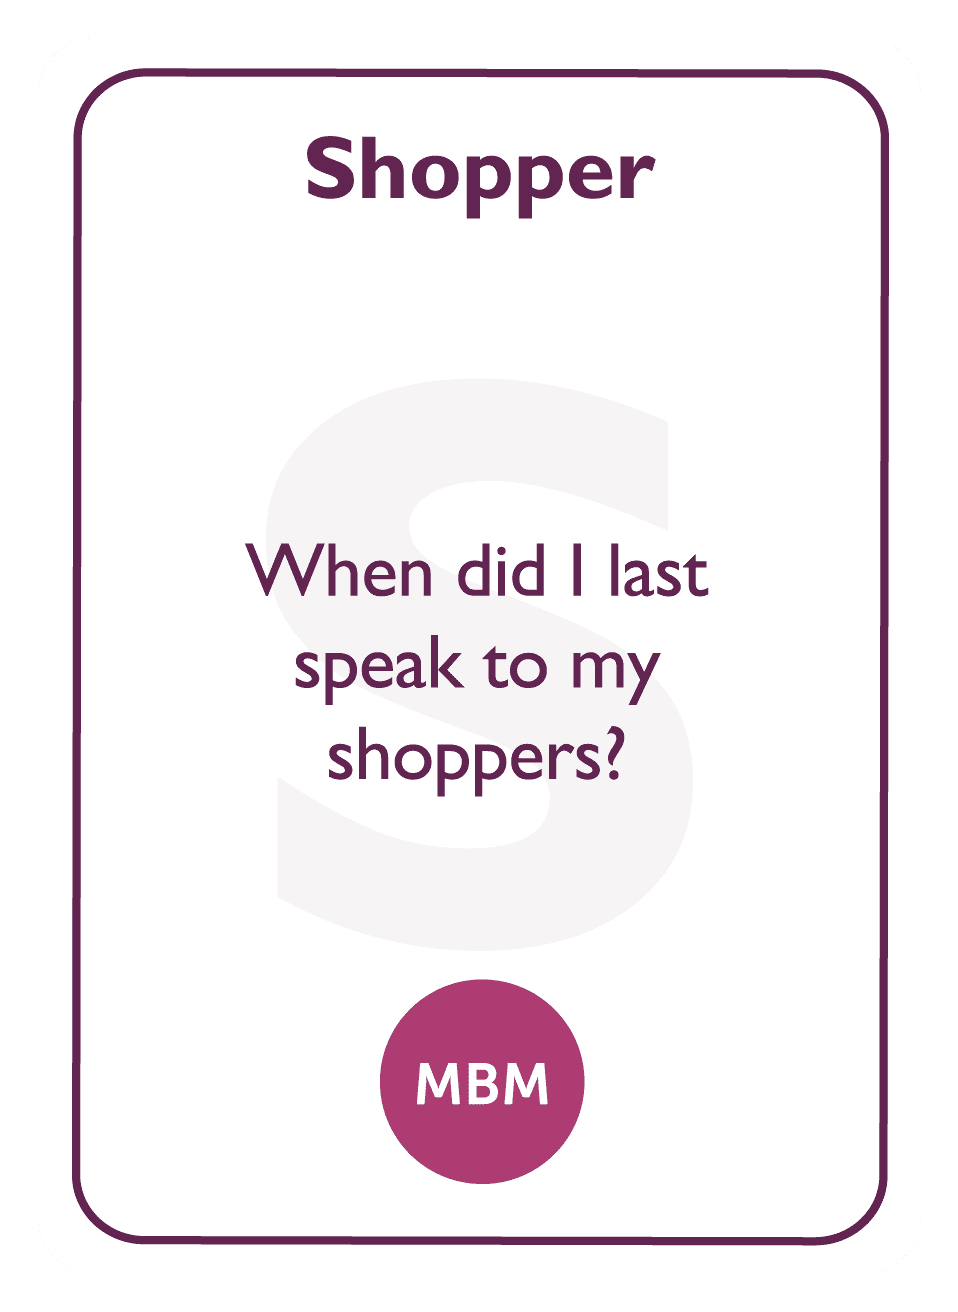 Negotiation coaching card titled Shopper